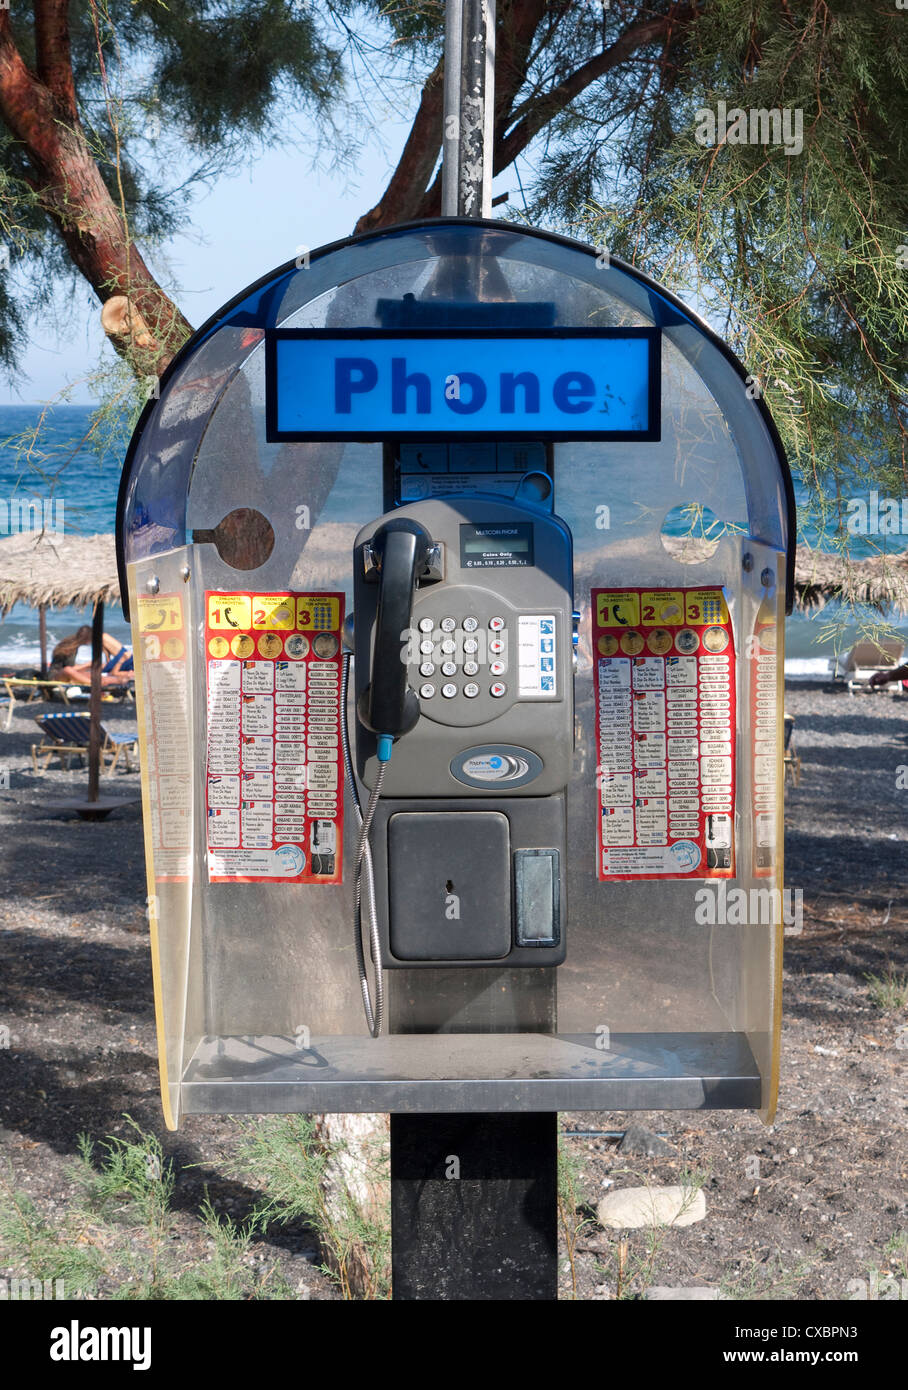 Cabina telefónica grecia fotografías e imágenes de alta resolución - Alamy